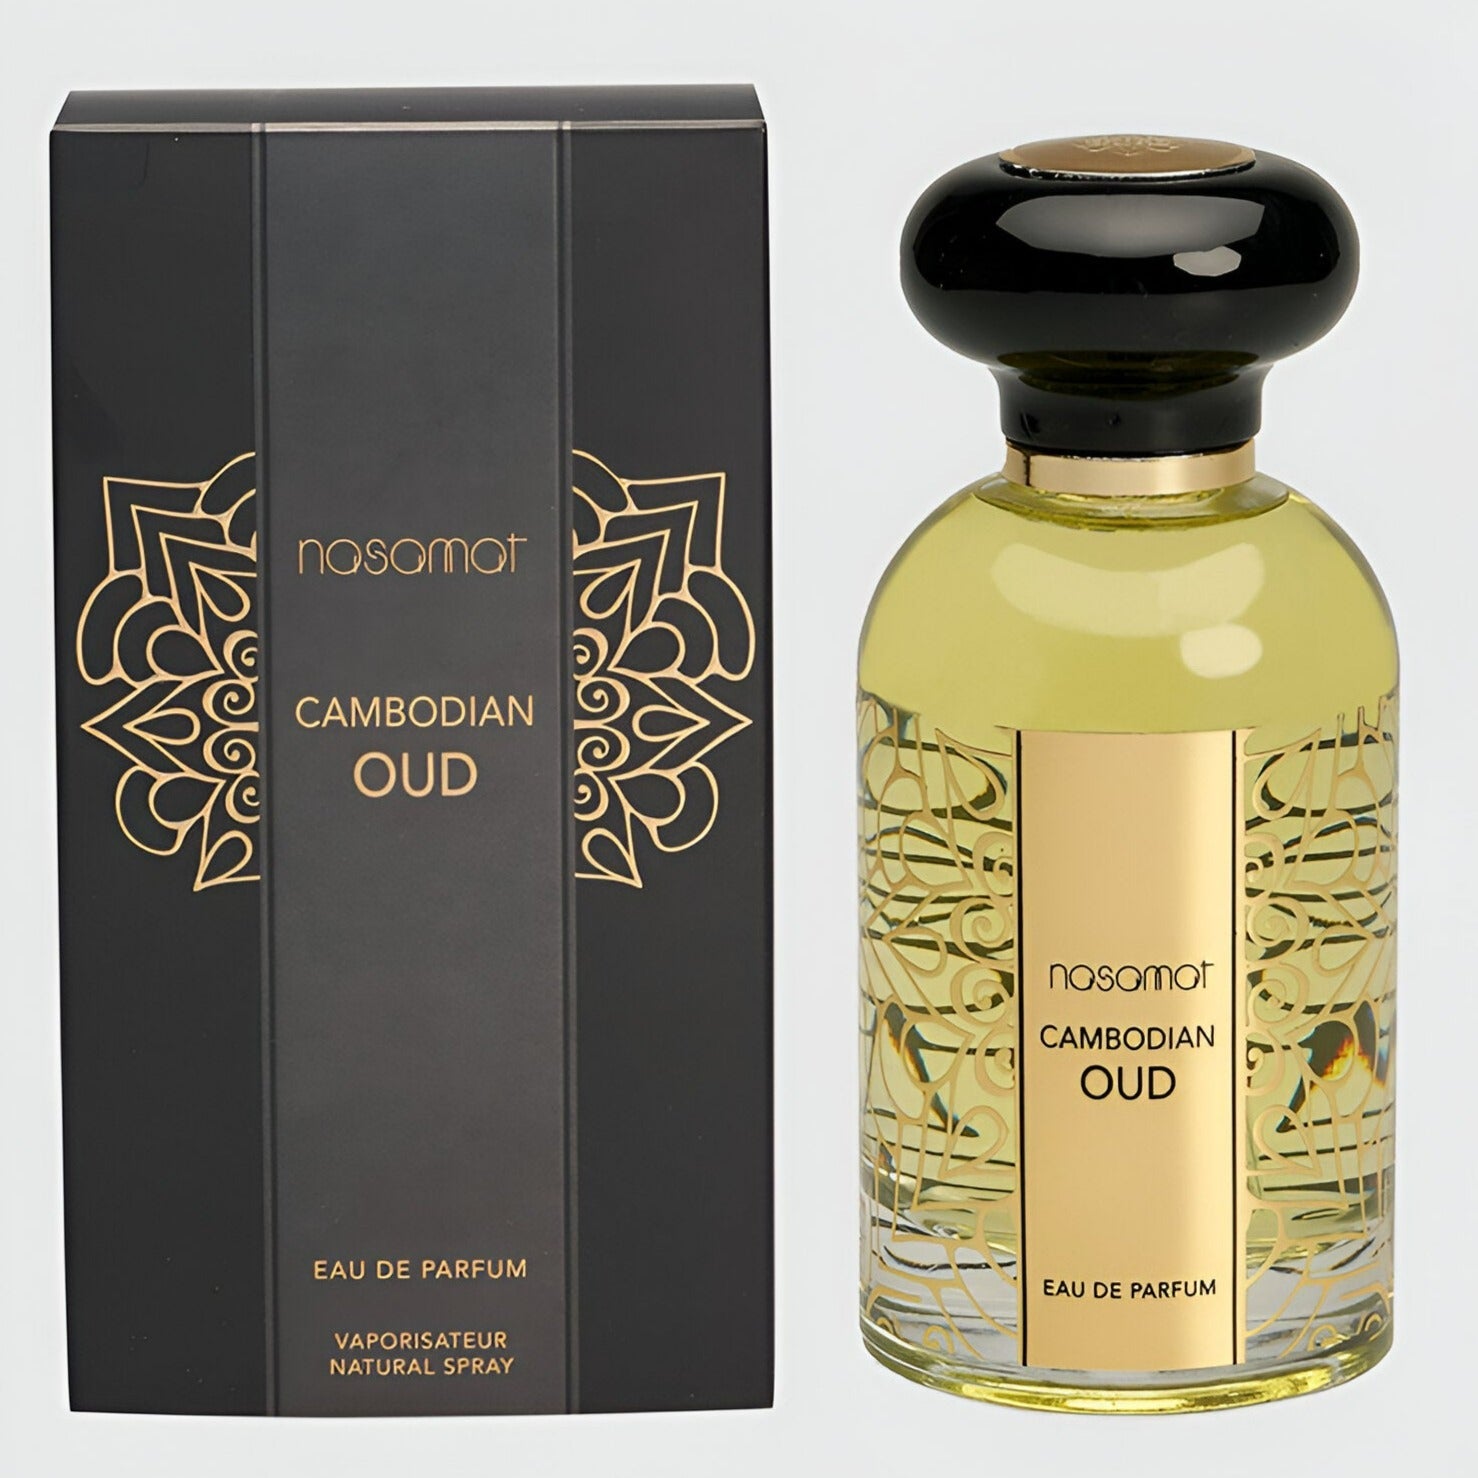 Nasamat Cambodian Oud Gold EDP | My Perfume Shop Australia